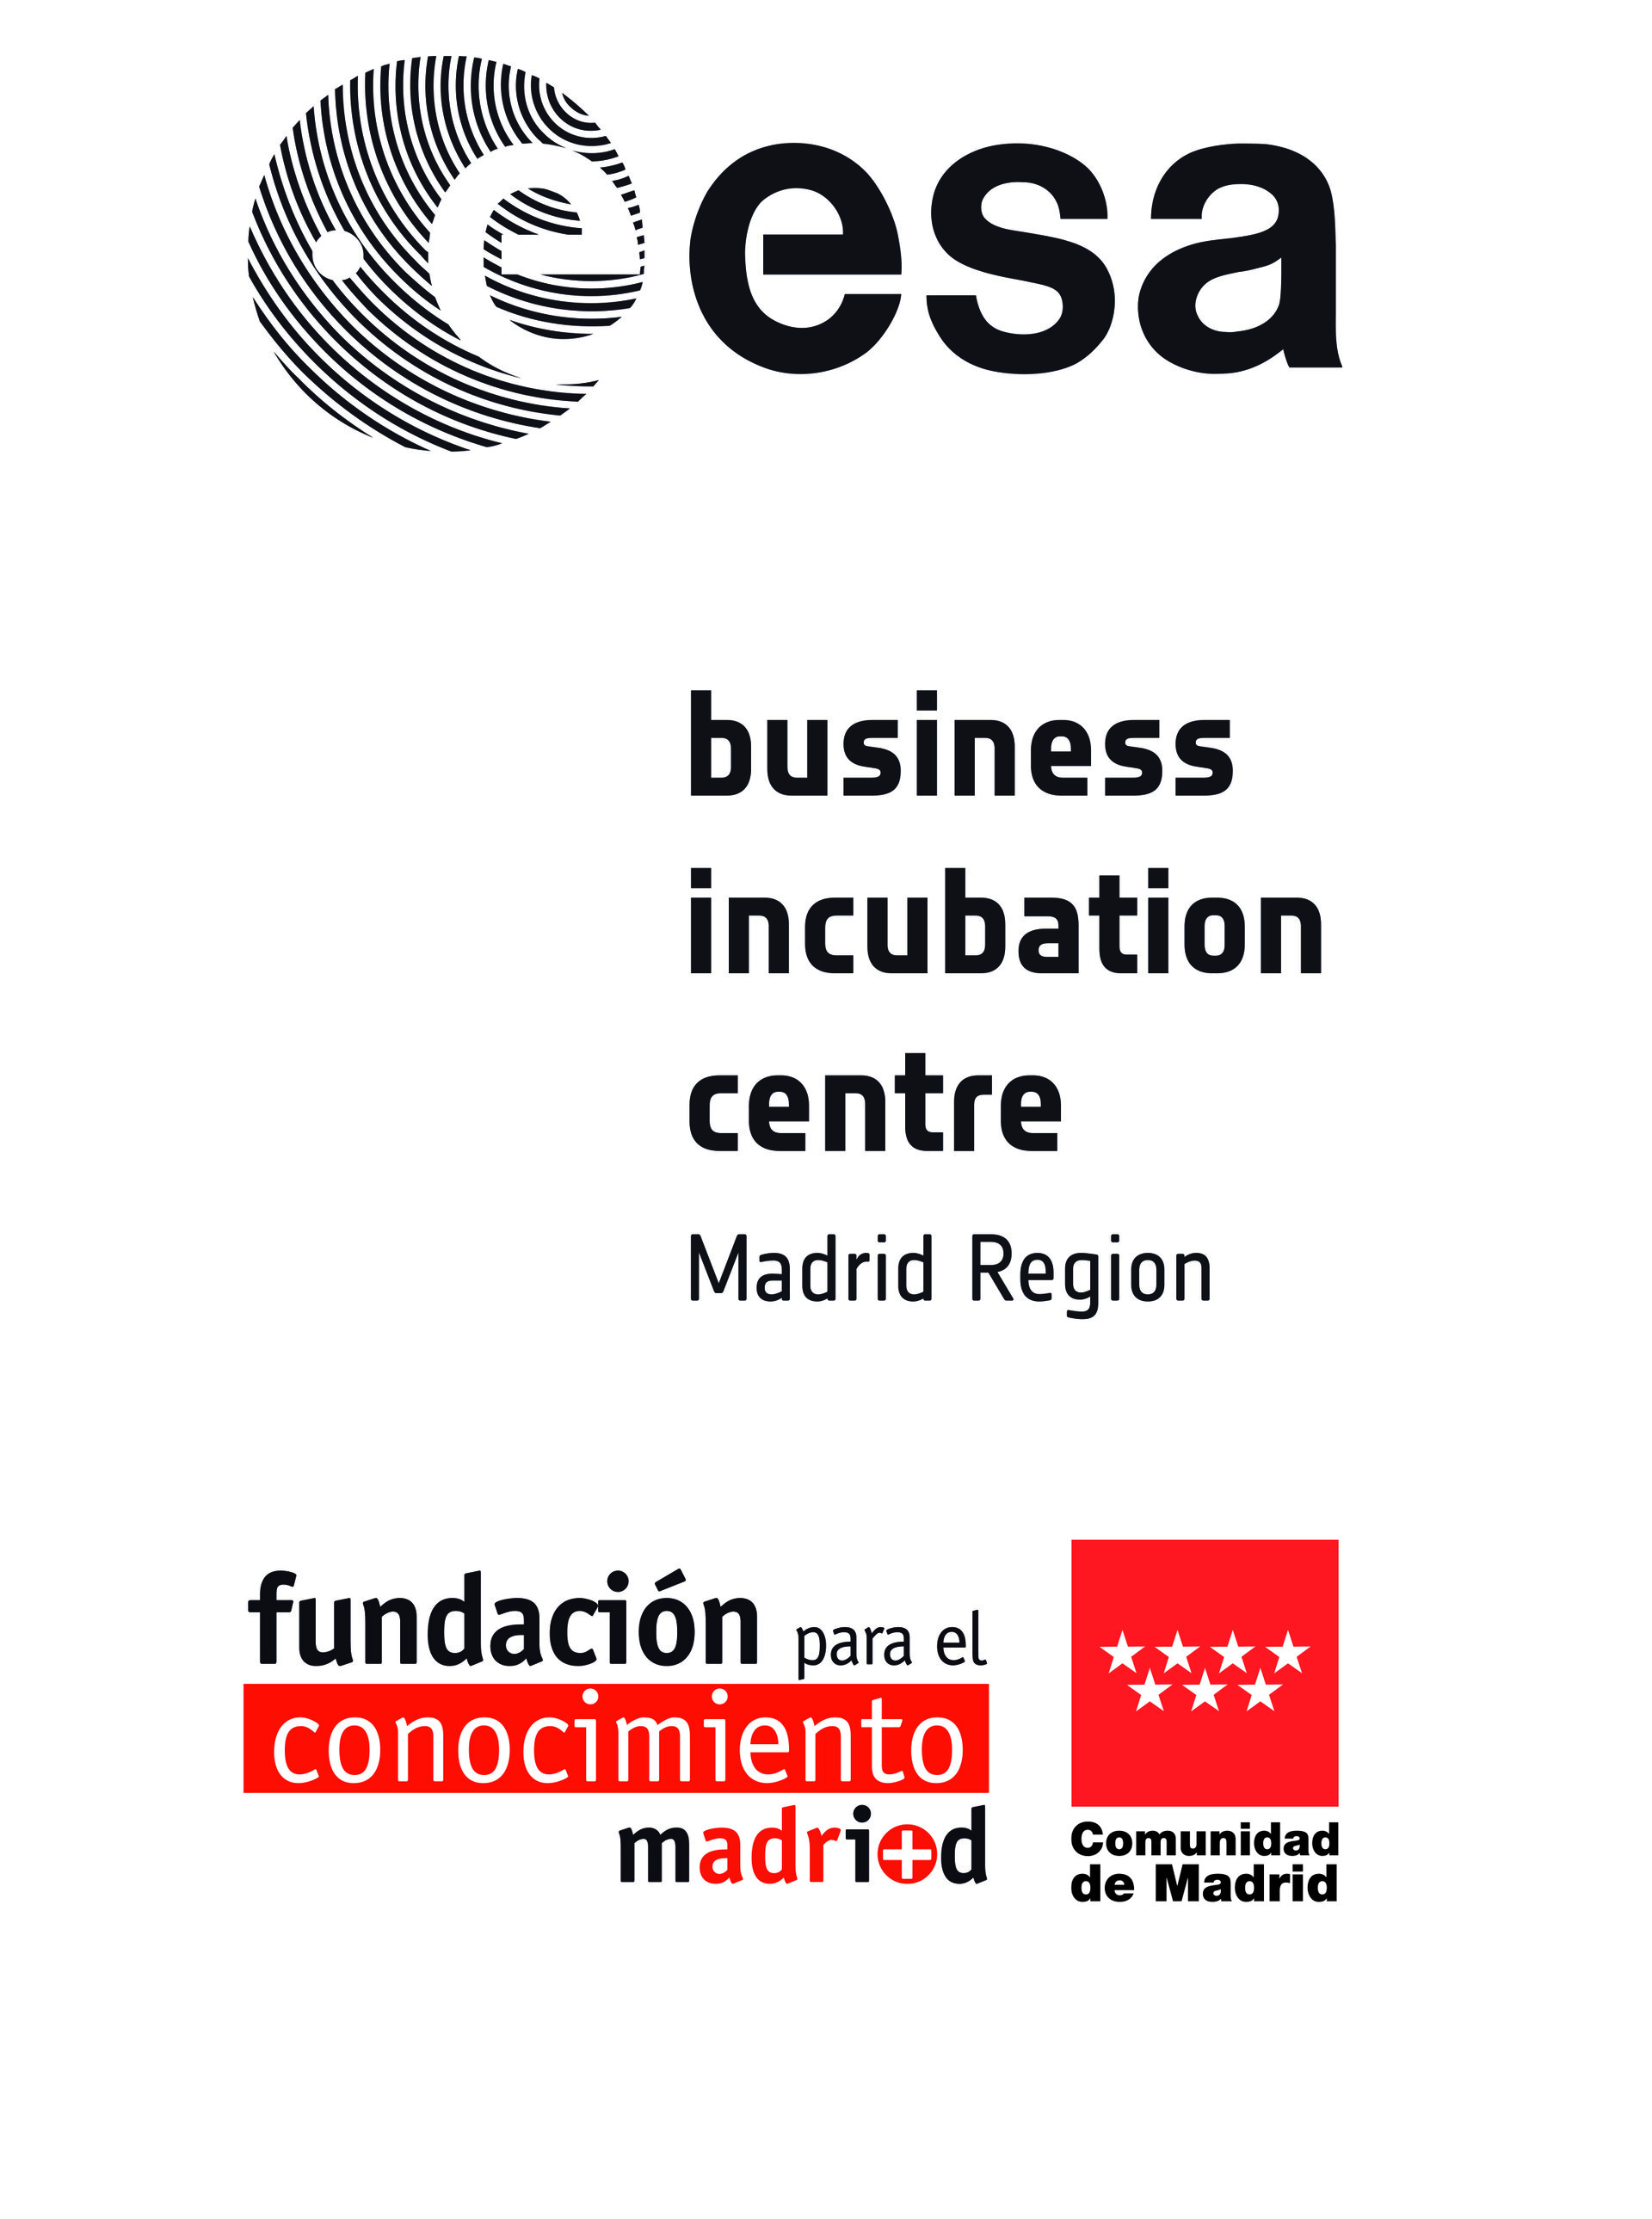 ESA Business Incubation Centre Madrid Region